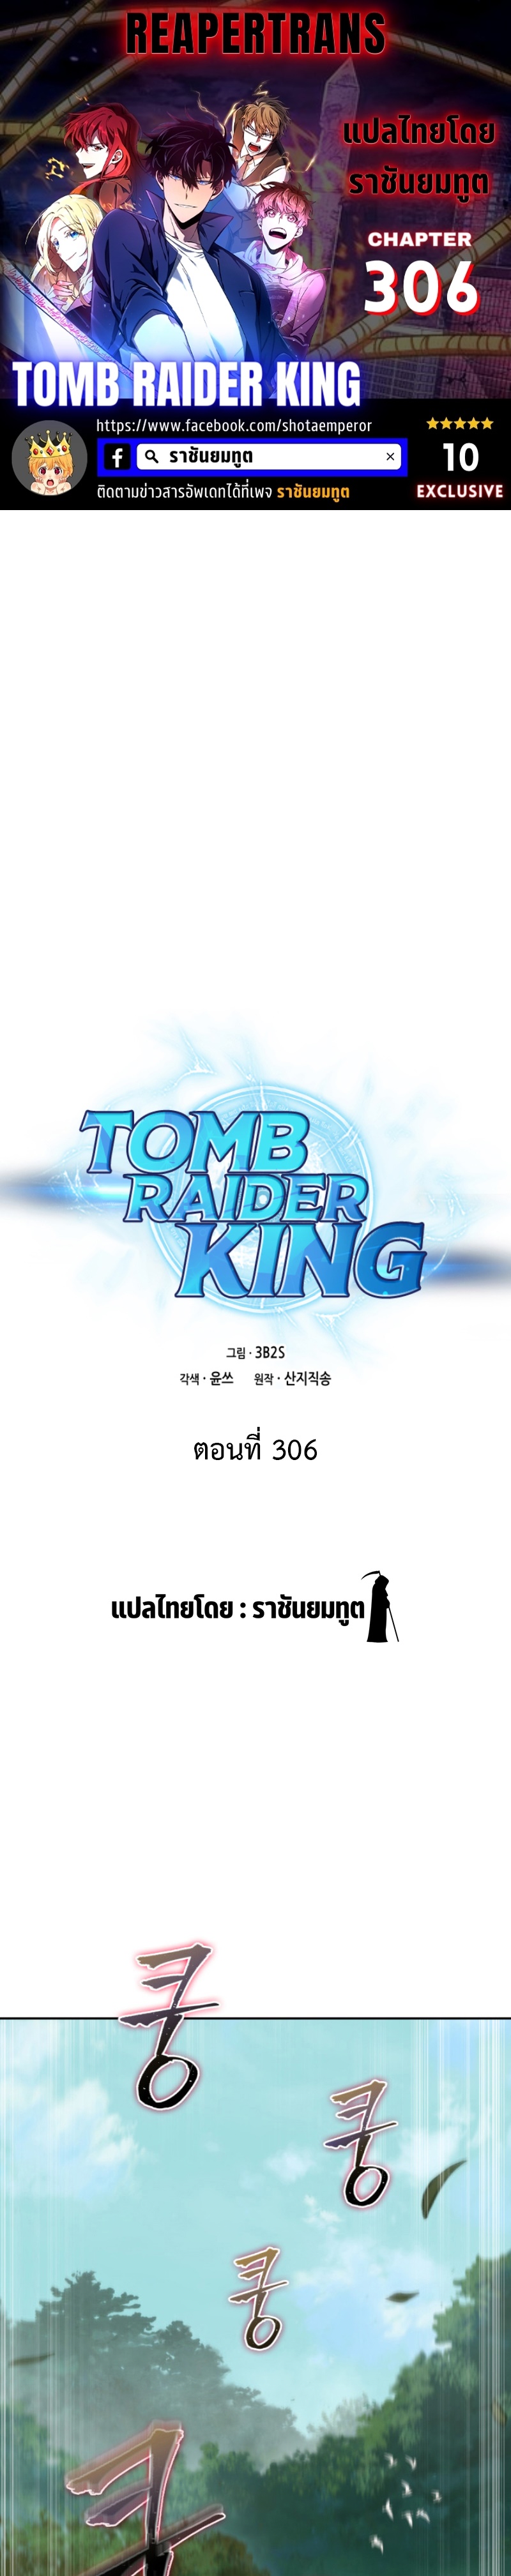 tomb raider king 306.01